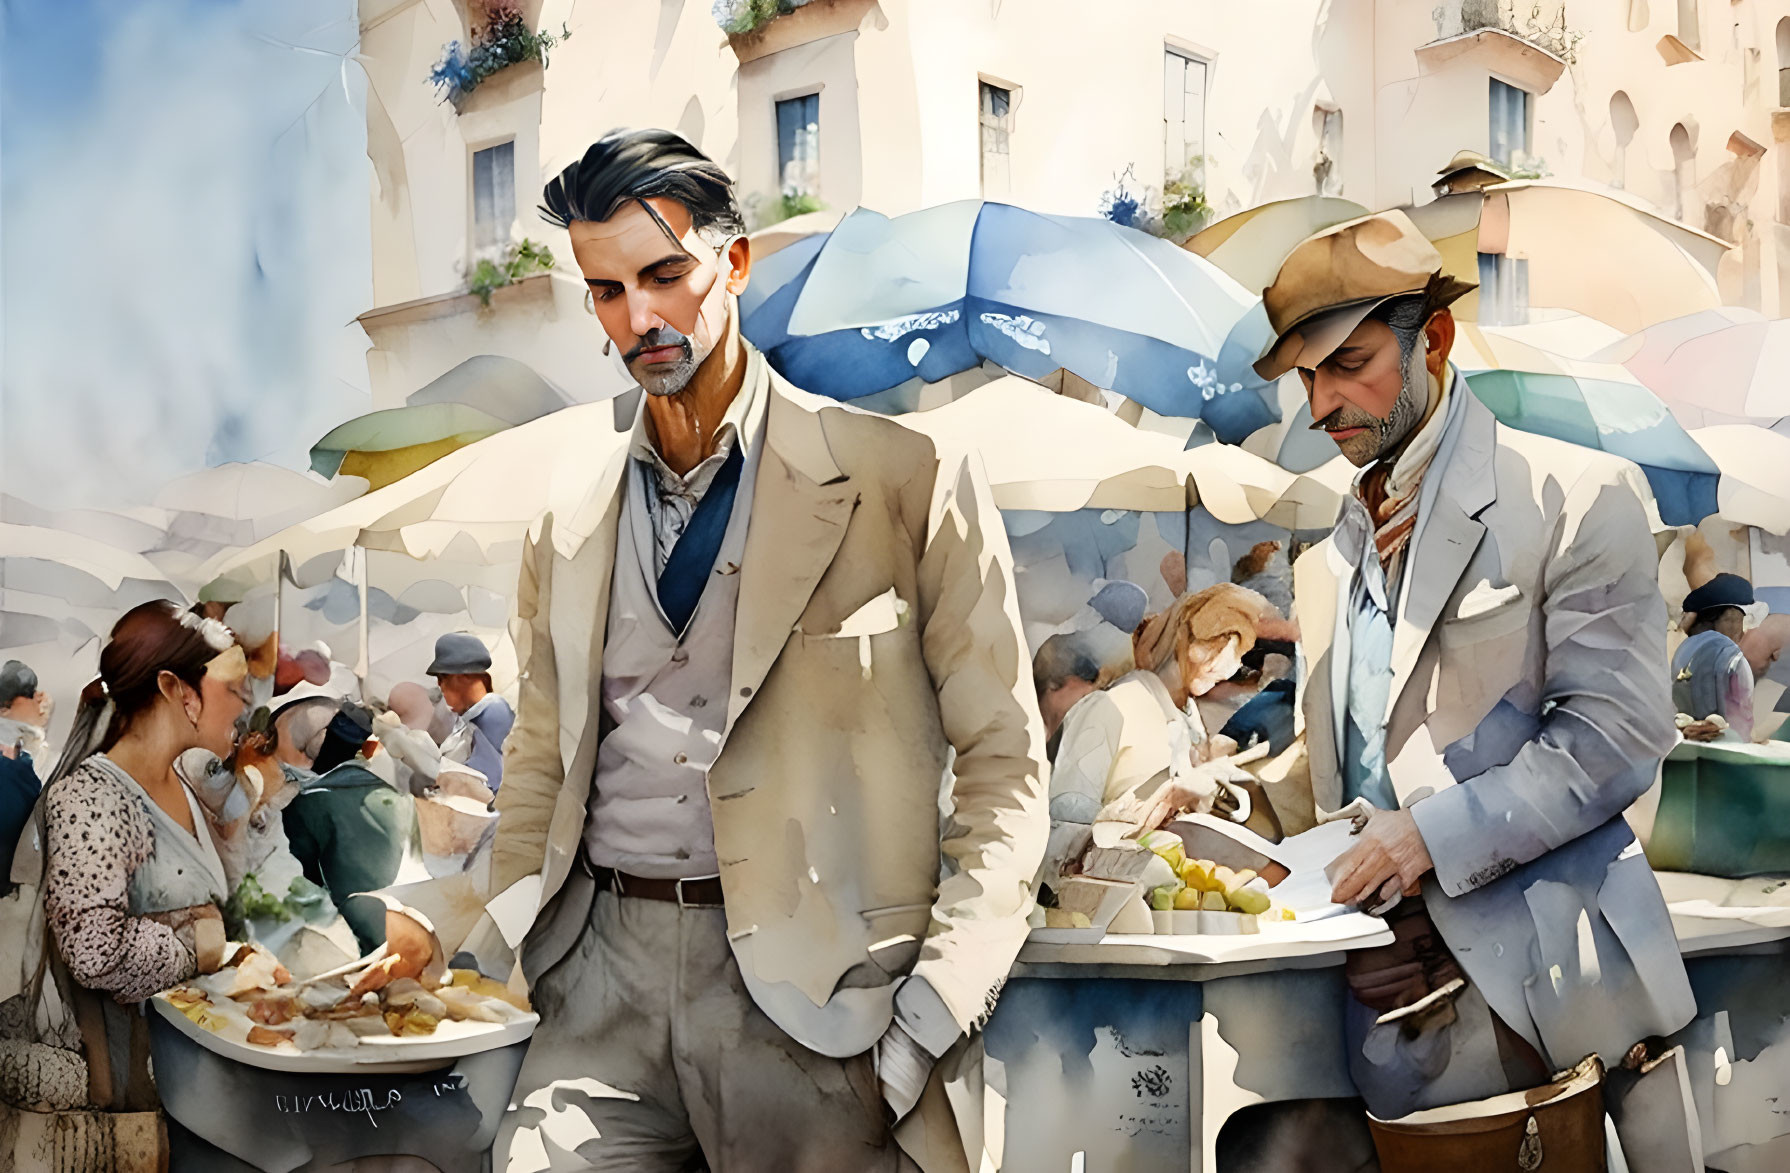 Two elegantly dressed men at a market stand under blue umbrellas amidst a bustling crowd.